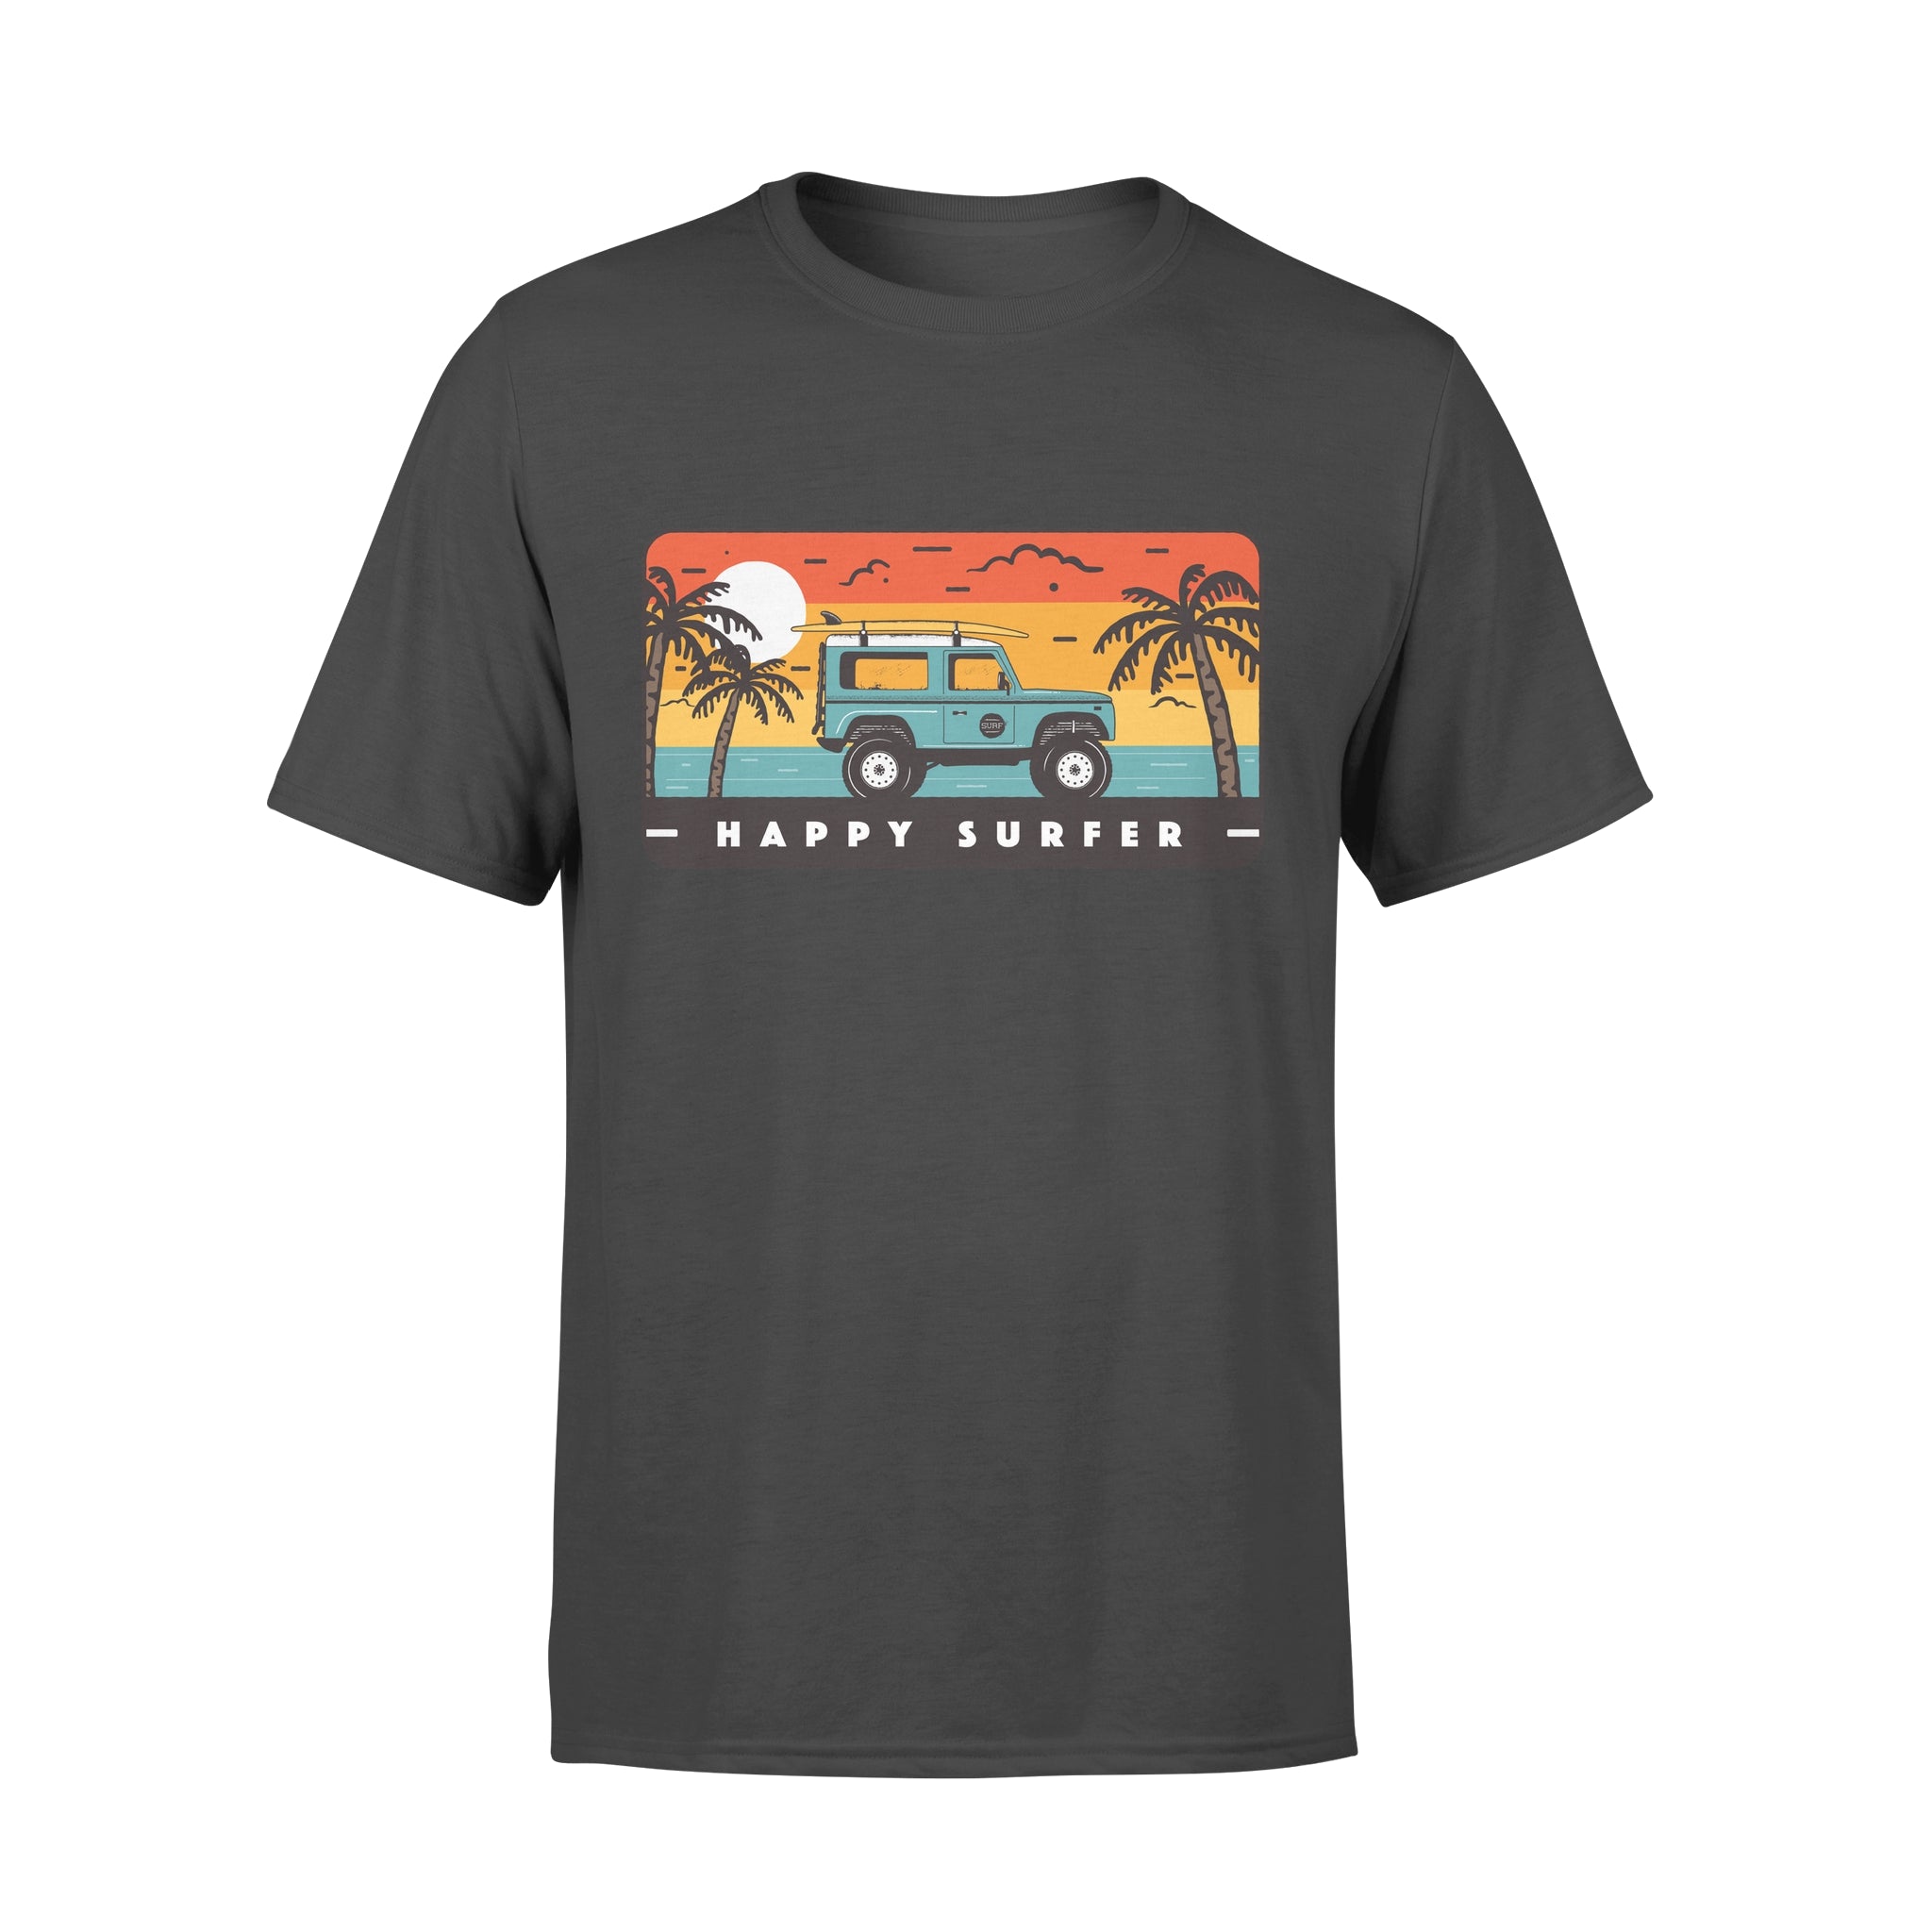 Happy Surfer - T-shirt